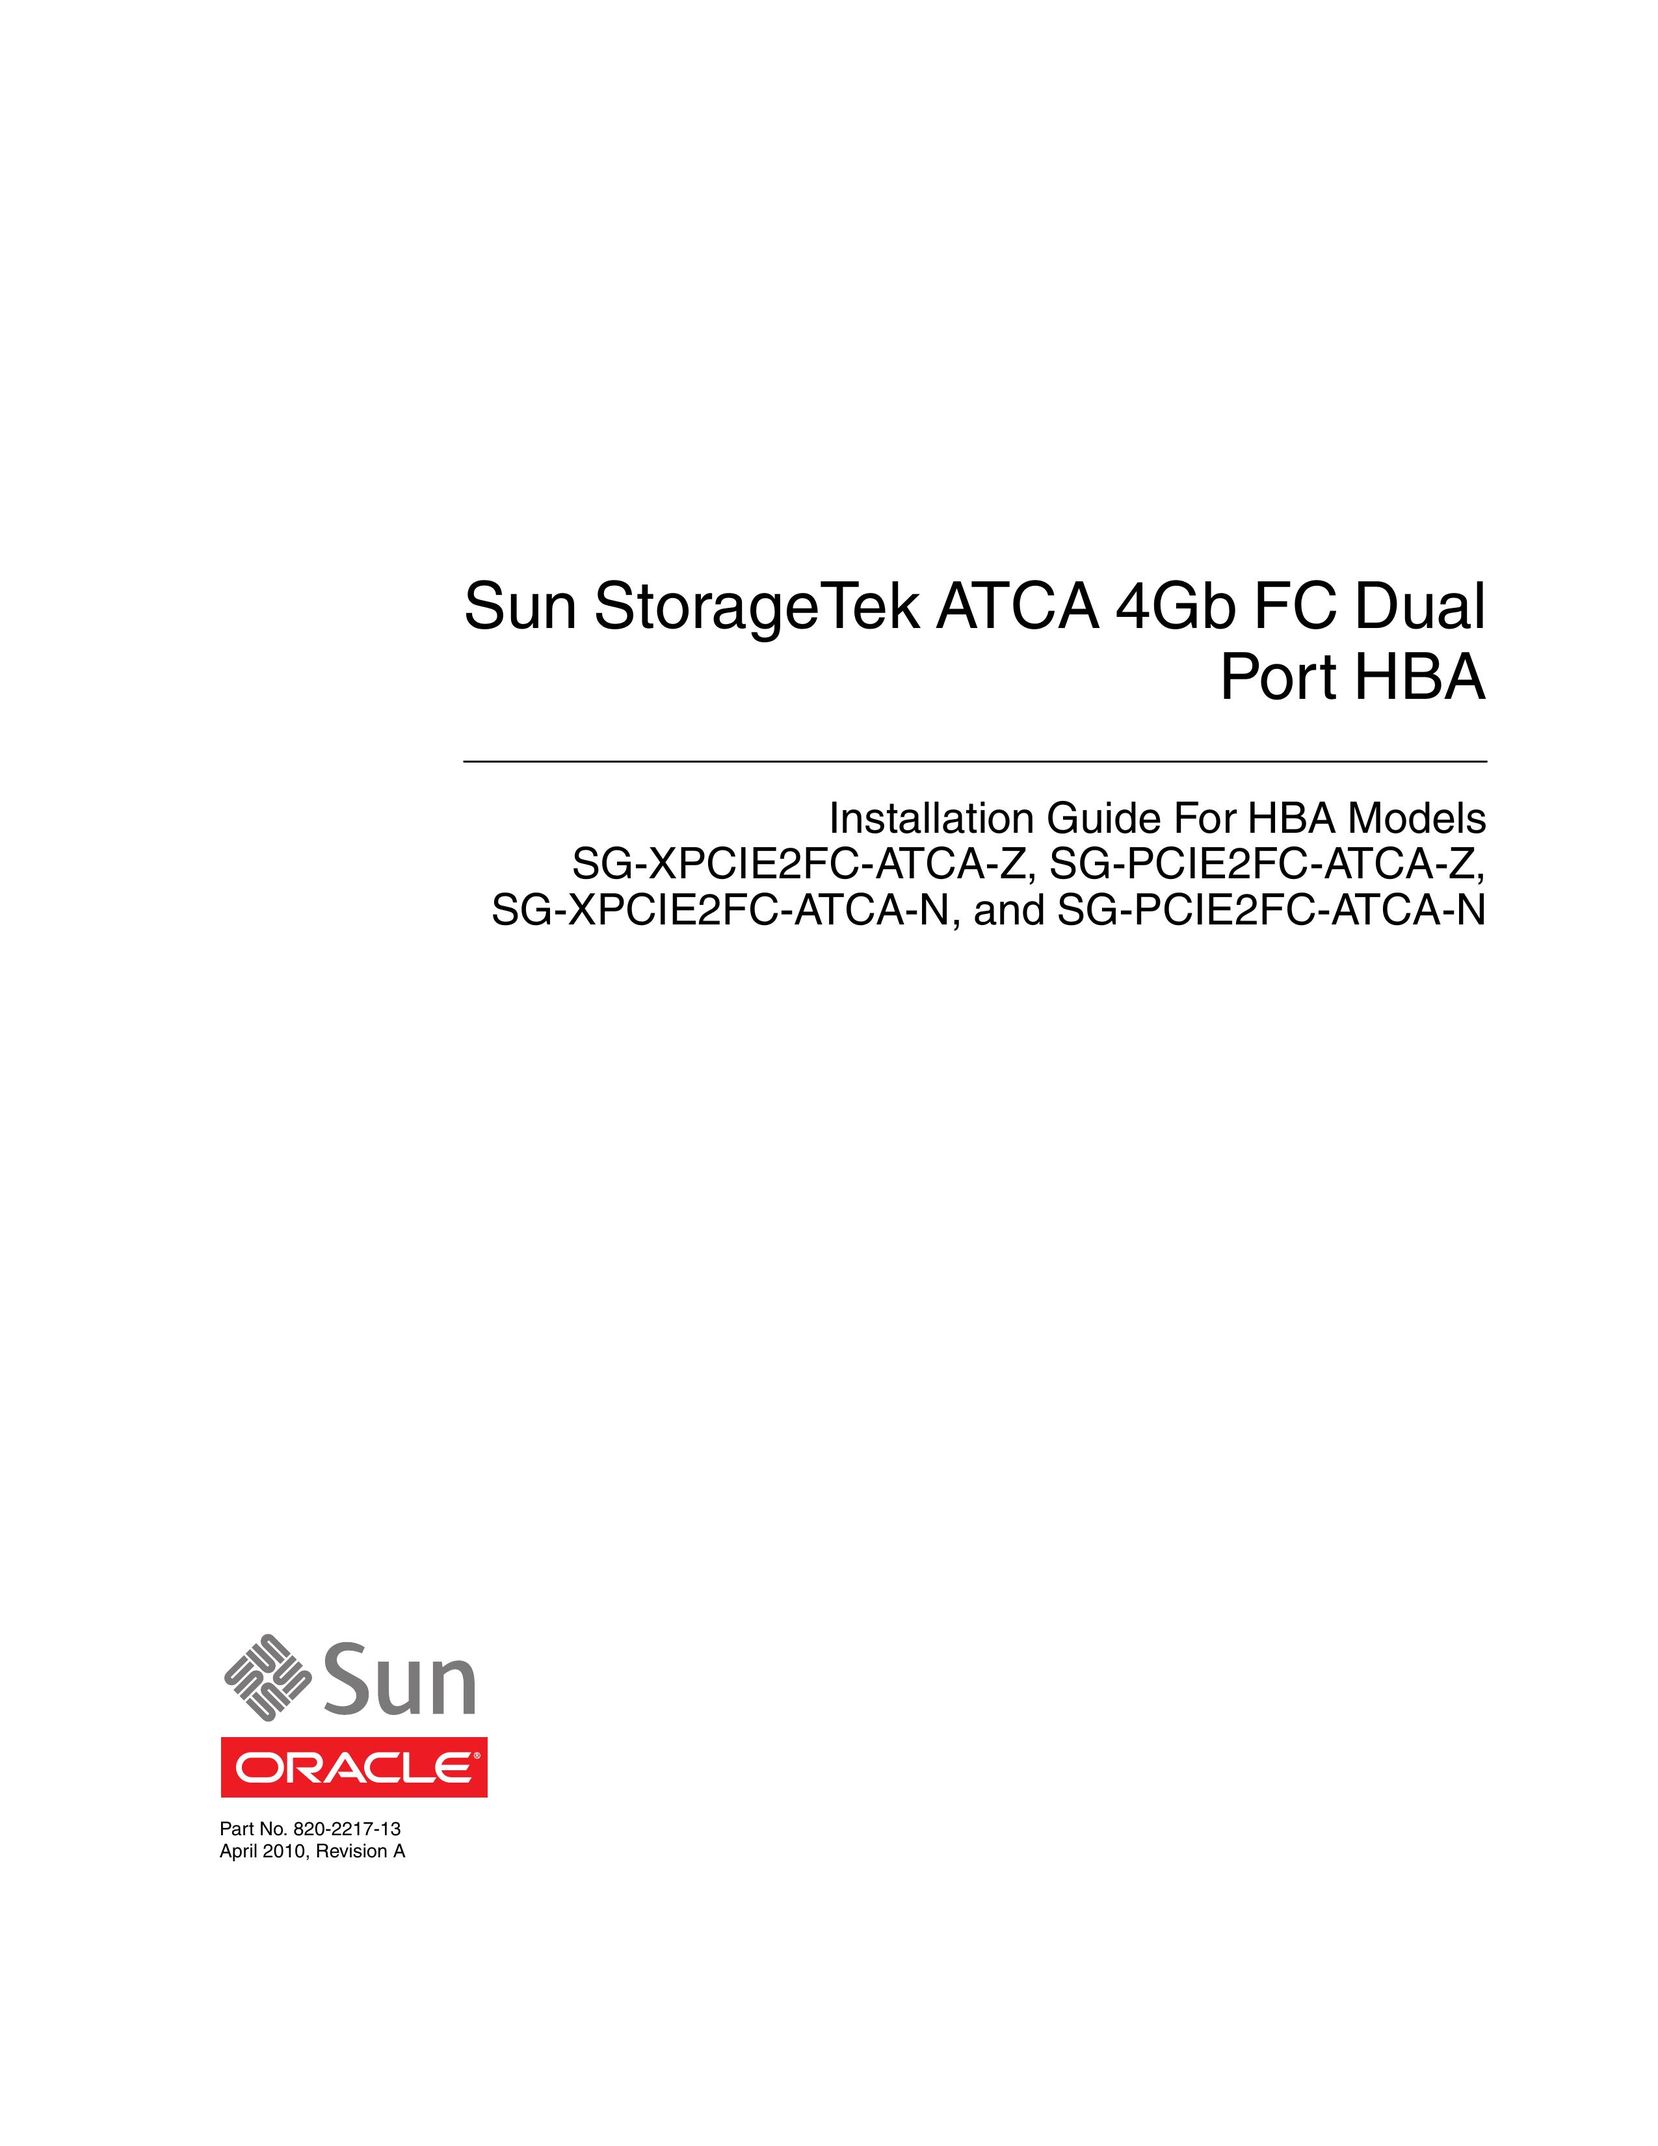 Oracle Audio Technologies SG-XPCIE2FC-ATCA-Z Computer Hardware User Manual